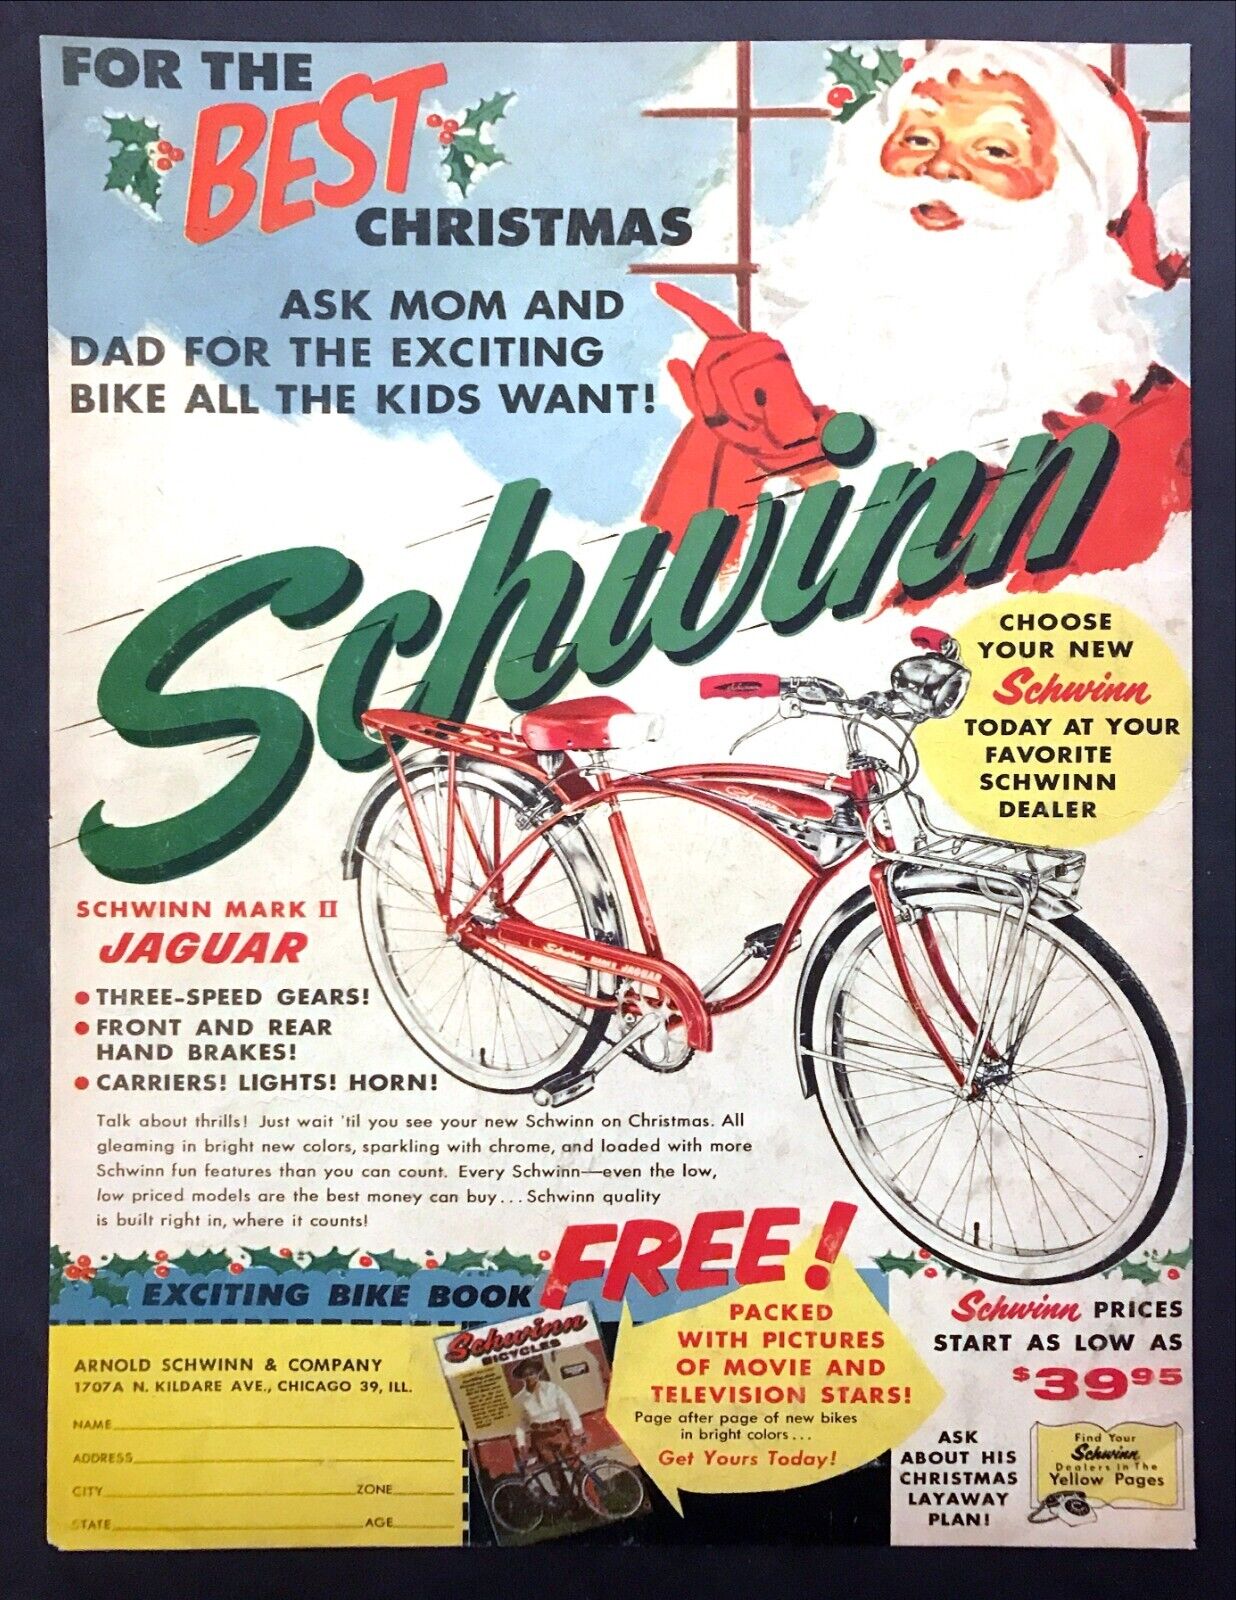 1958 Schwinn Mark II Jaguar Bicycle photo Christmas Santa art vintage print ad